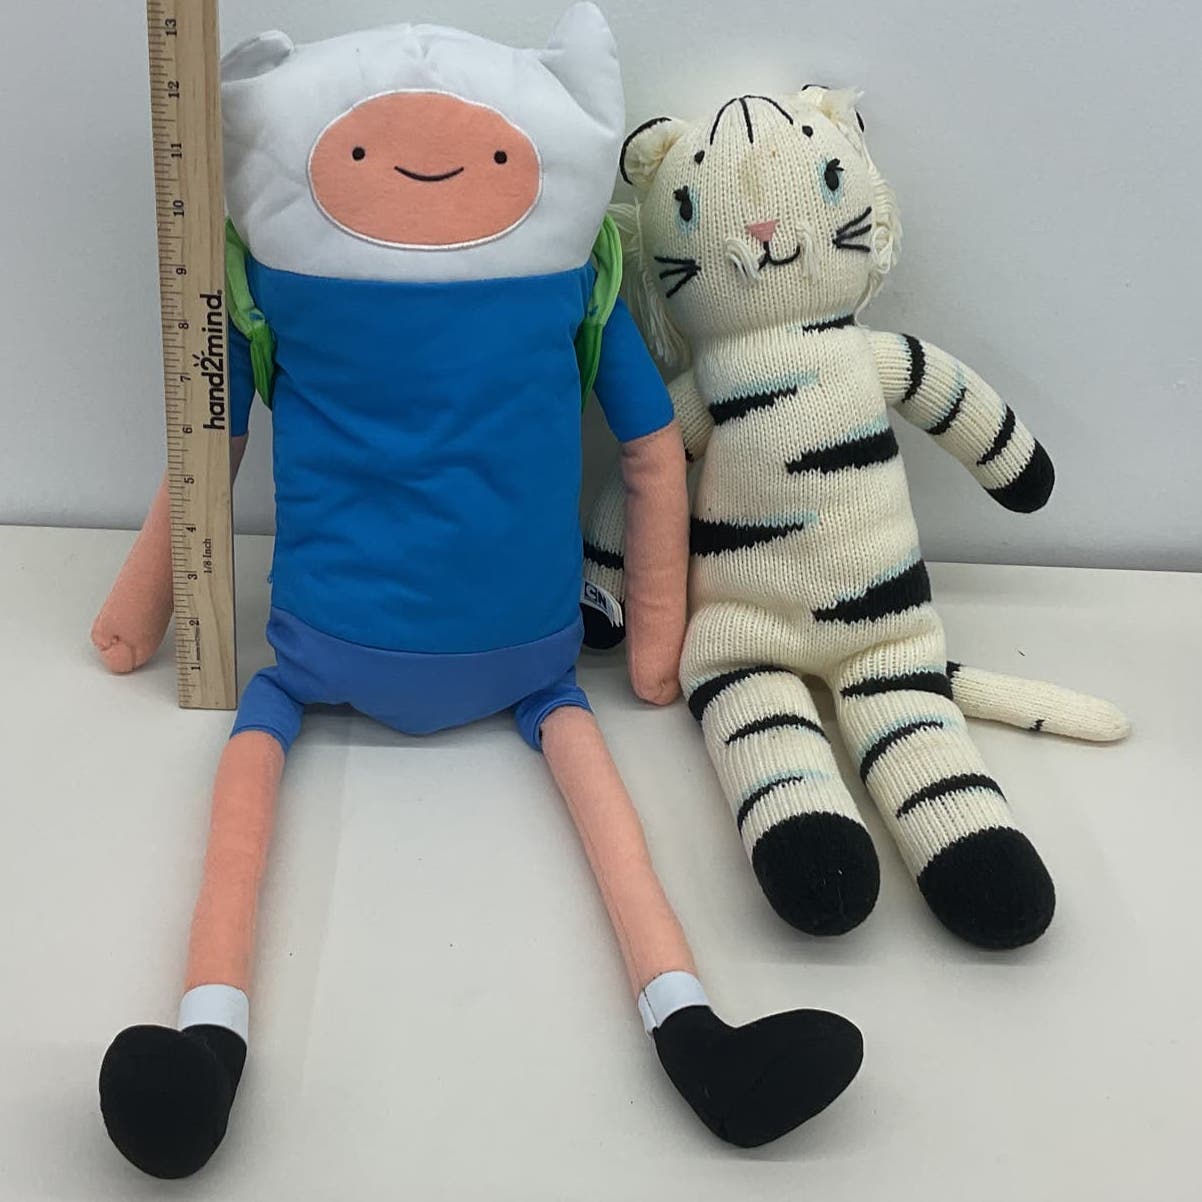 2 Plush Blabla Black White Striped Zebra Cartoon Network Finn Adventure Time - Warehouse Toys